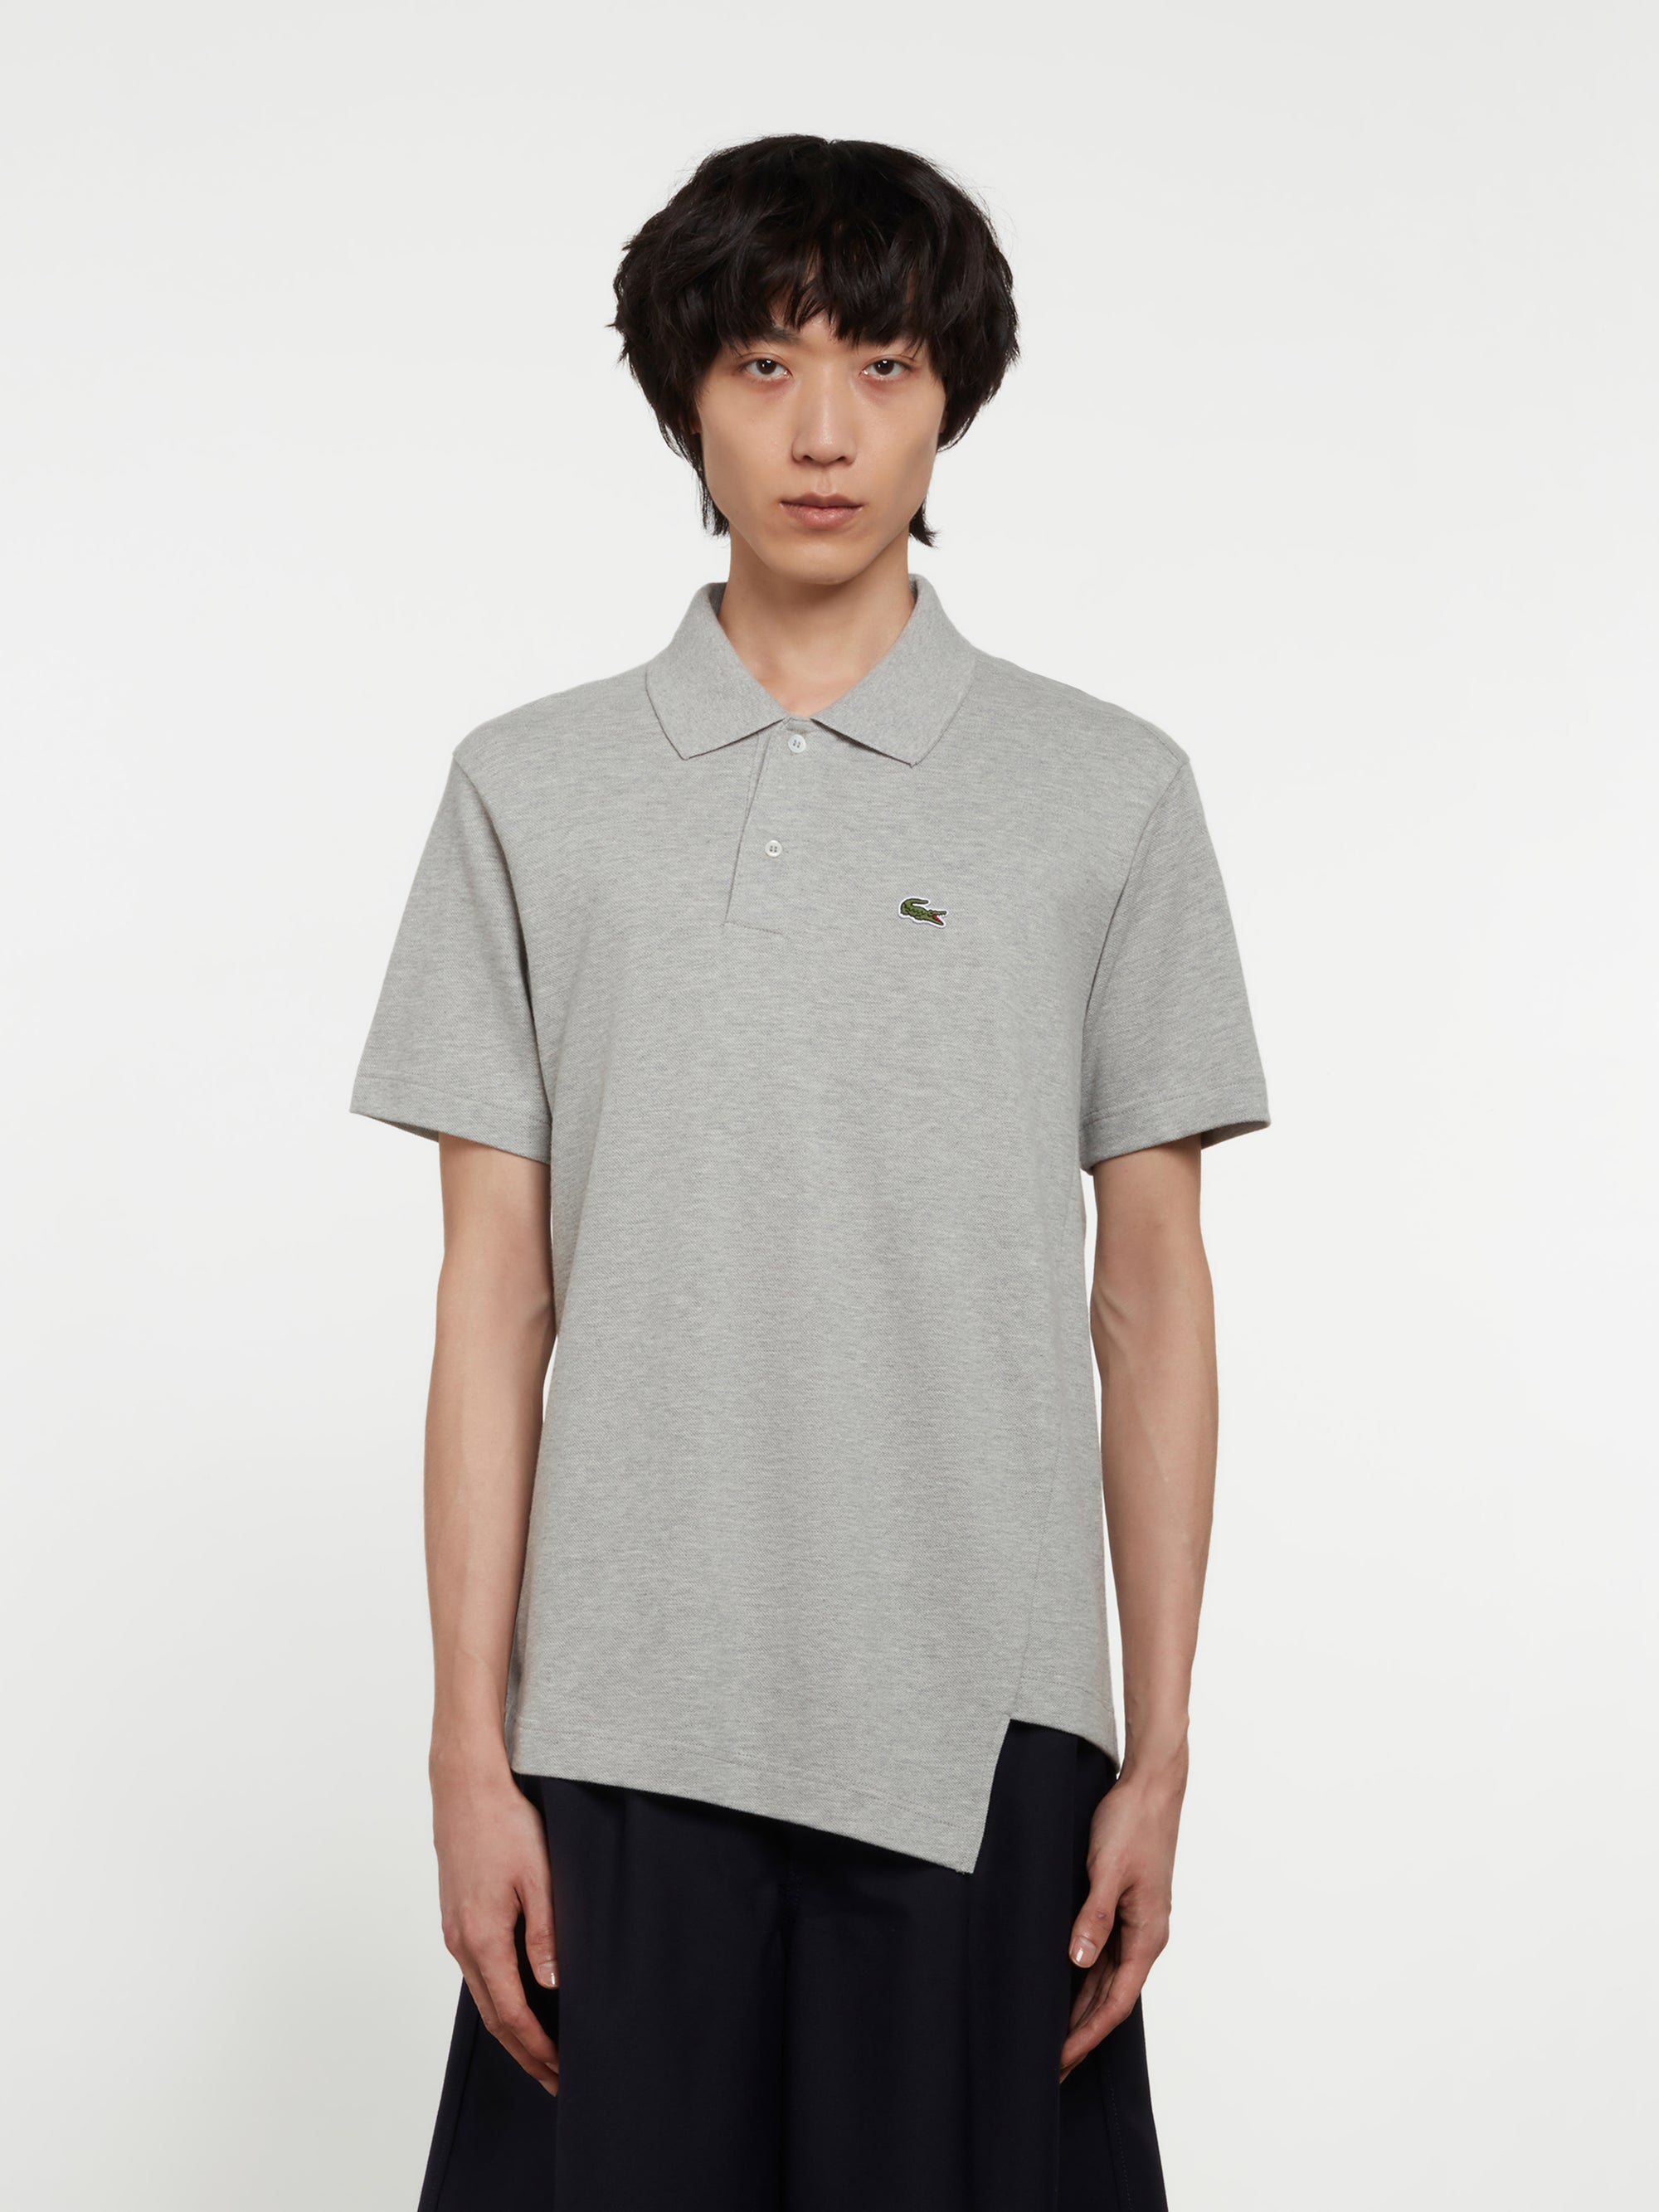 CDG Shirt - Lacoste Men's Asymmetric Polo Shirt - (Grey) view 1